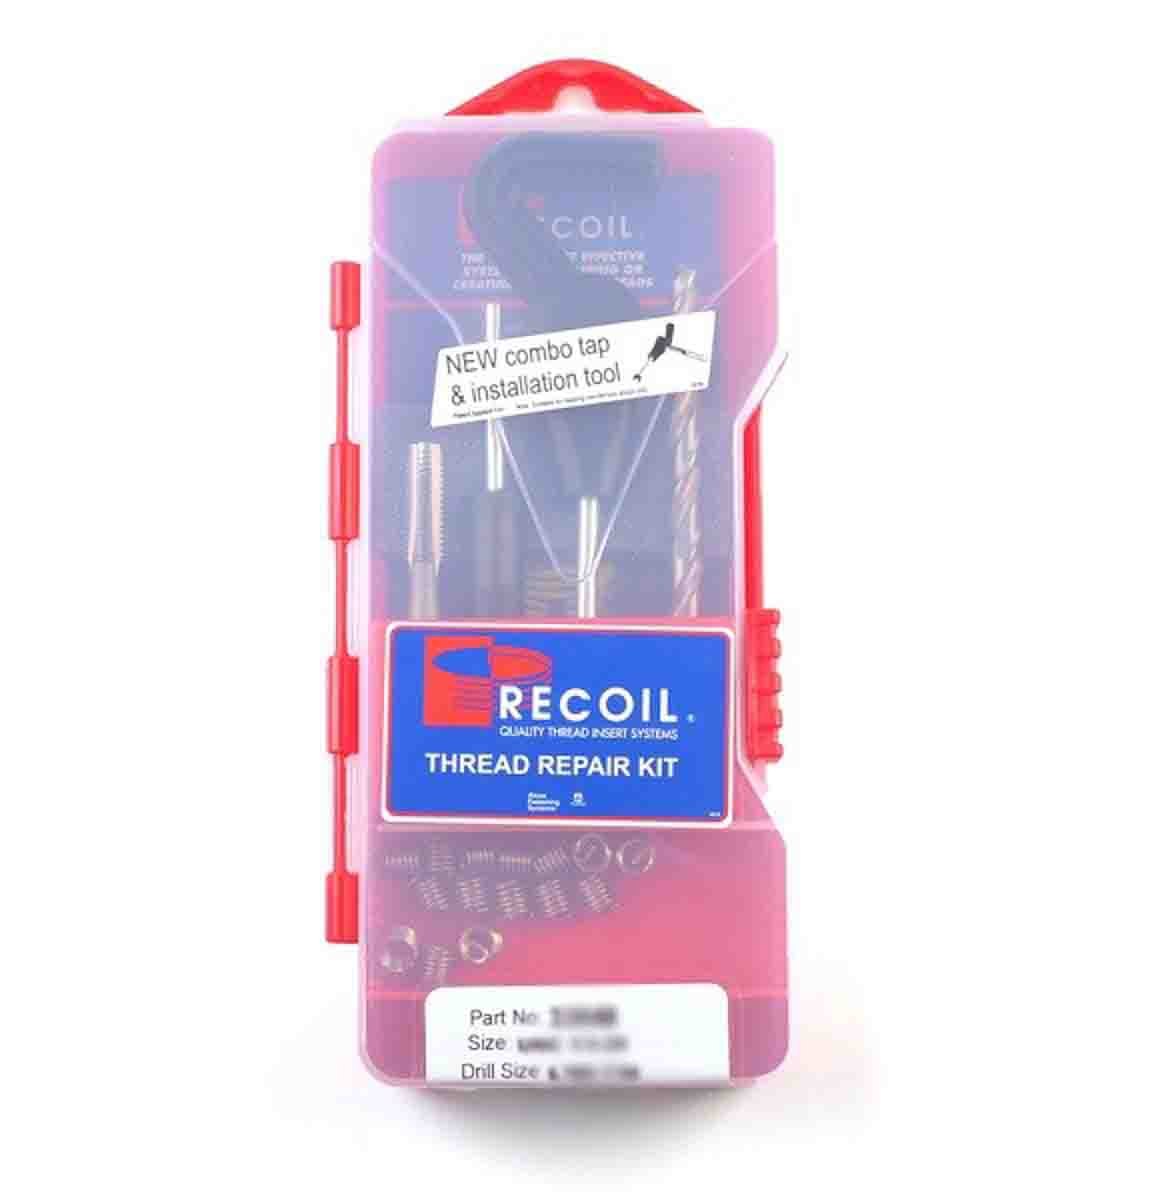 Recoil 15 piece M8 x 1 Thread Repair Kit